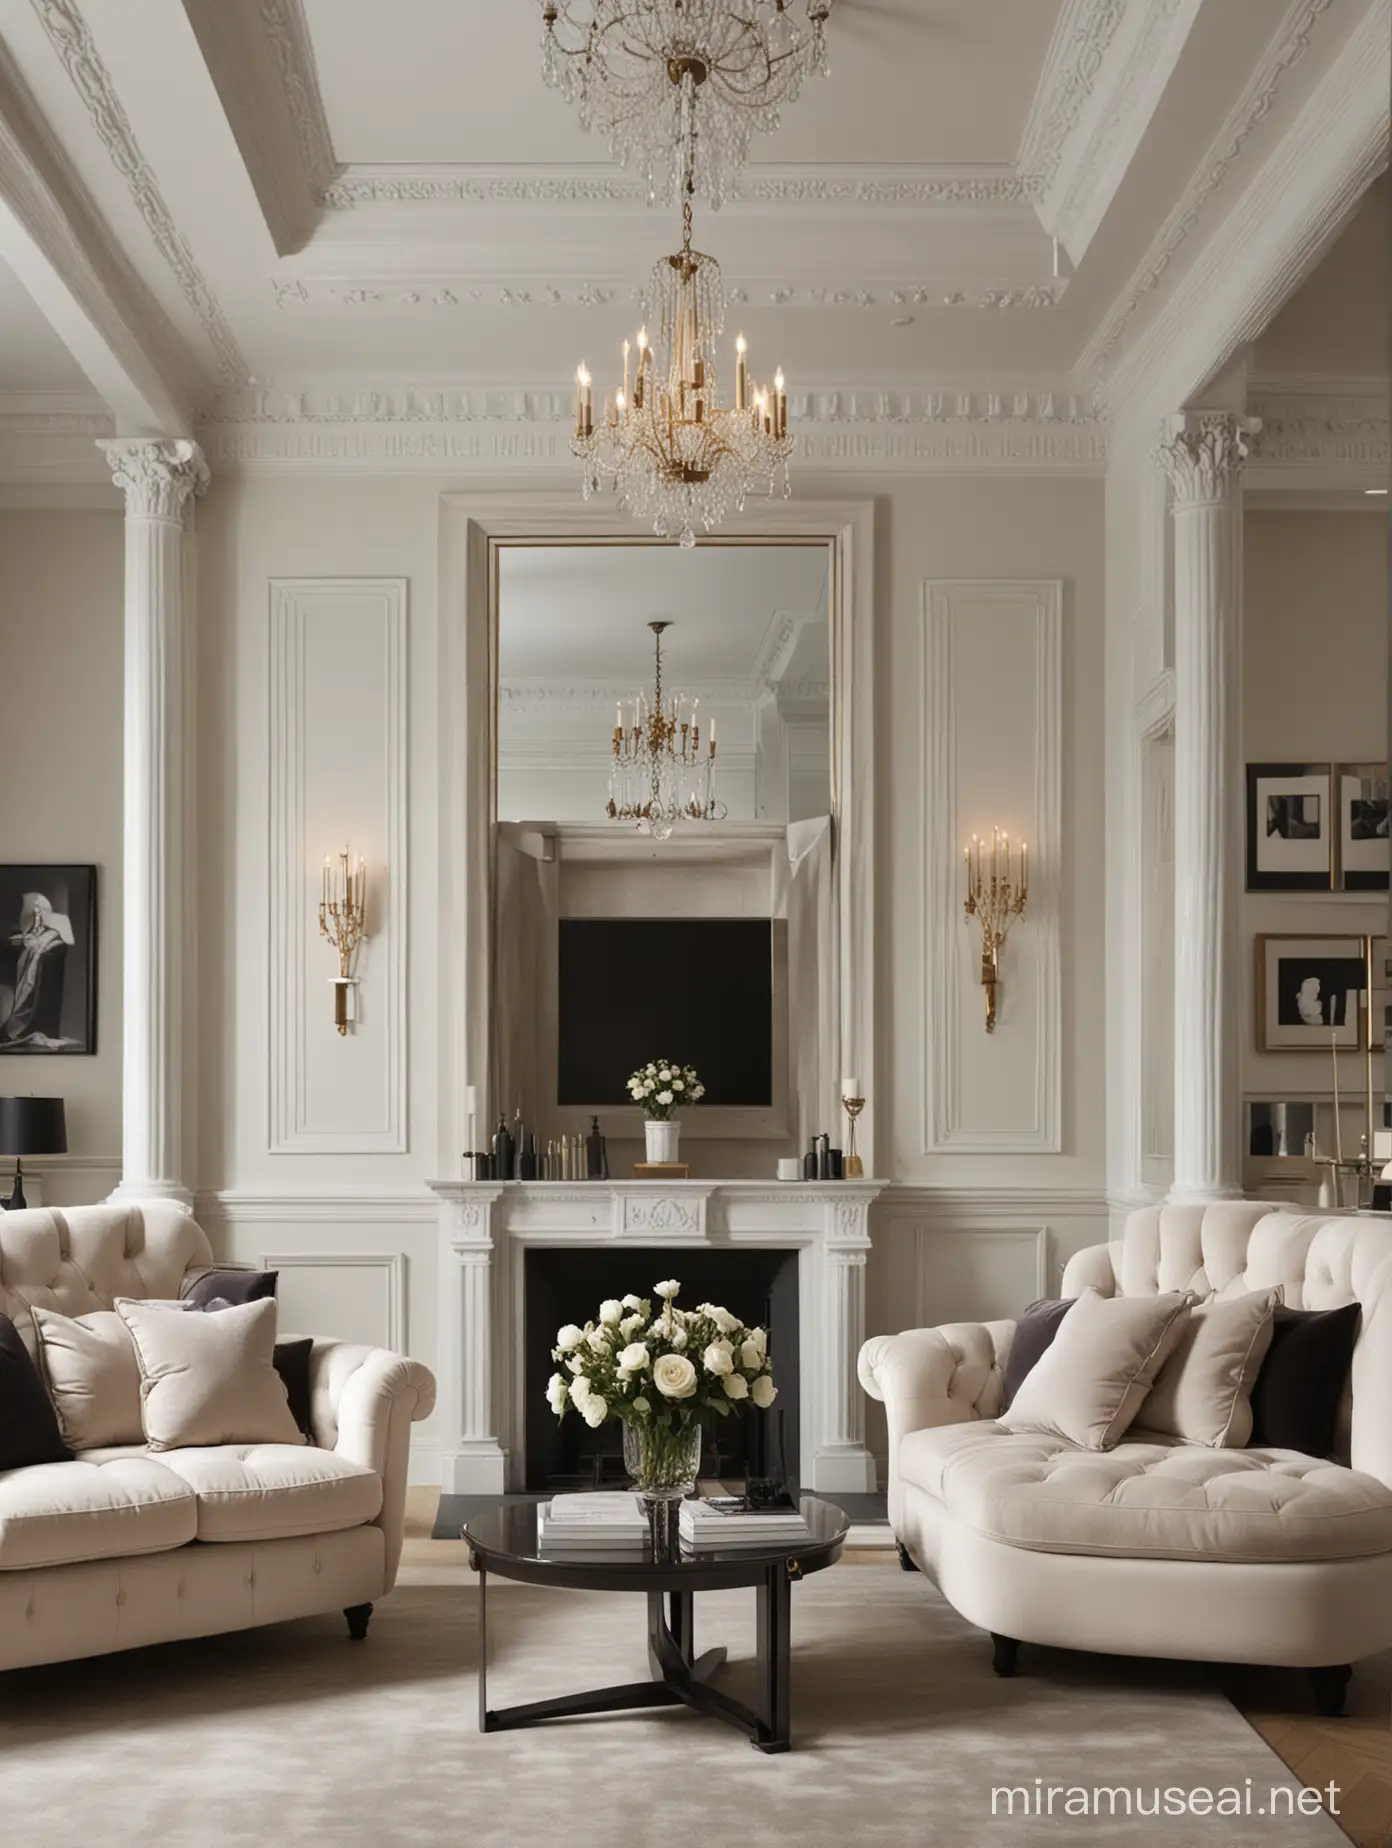 London contermporary interior design with classical feature